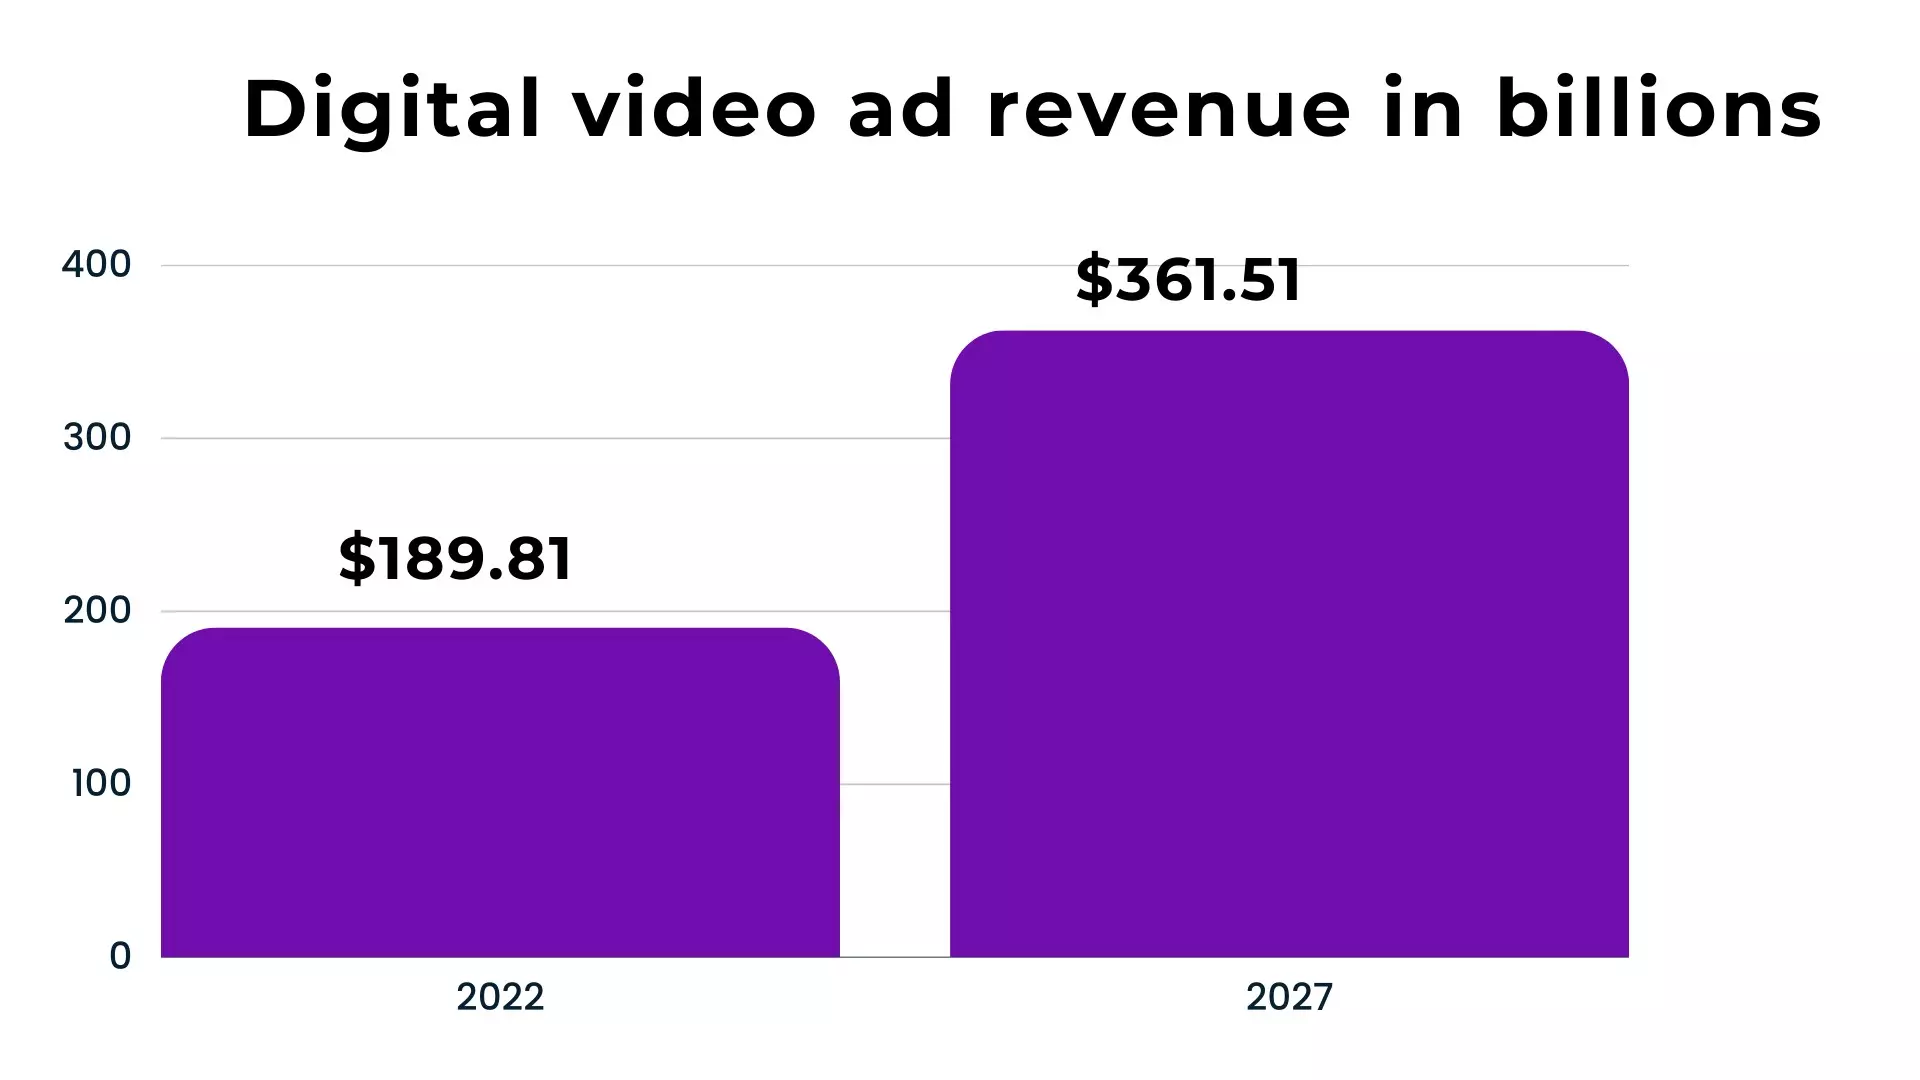 Video ad revenue